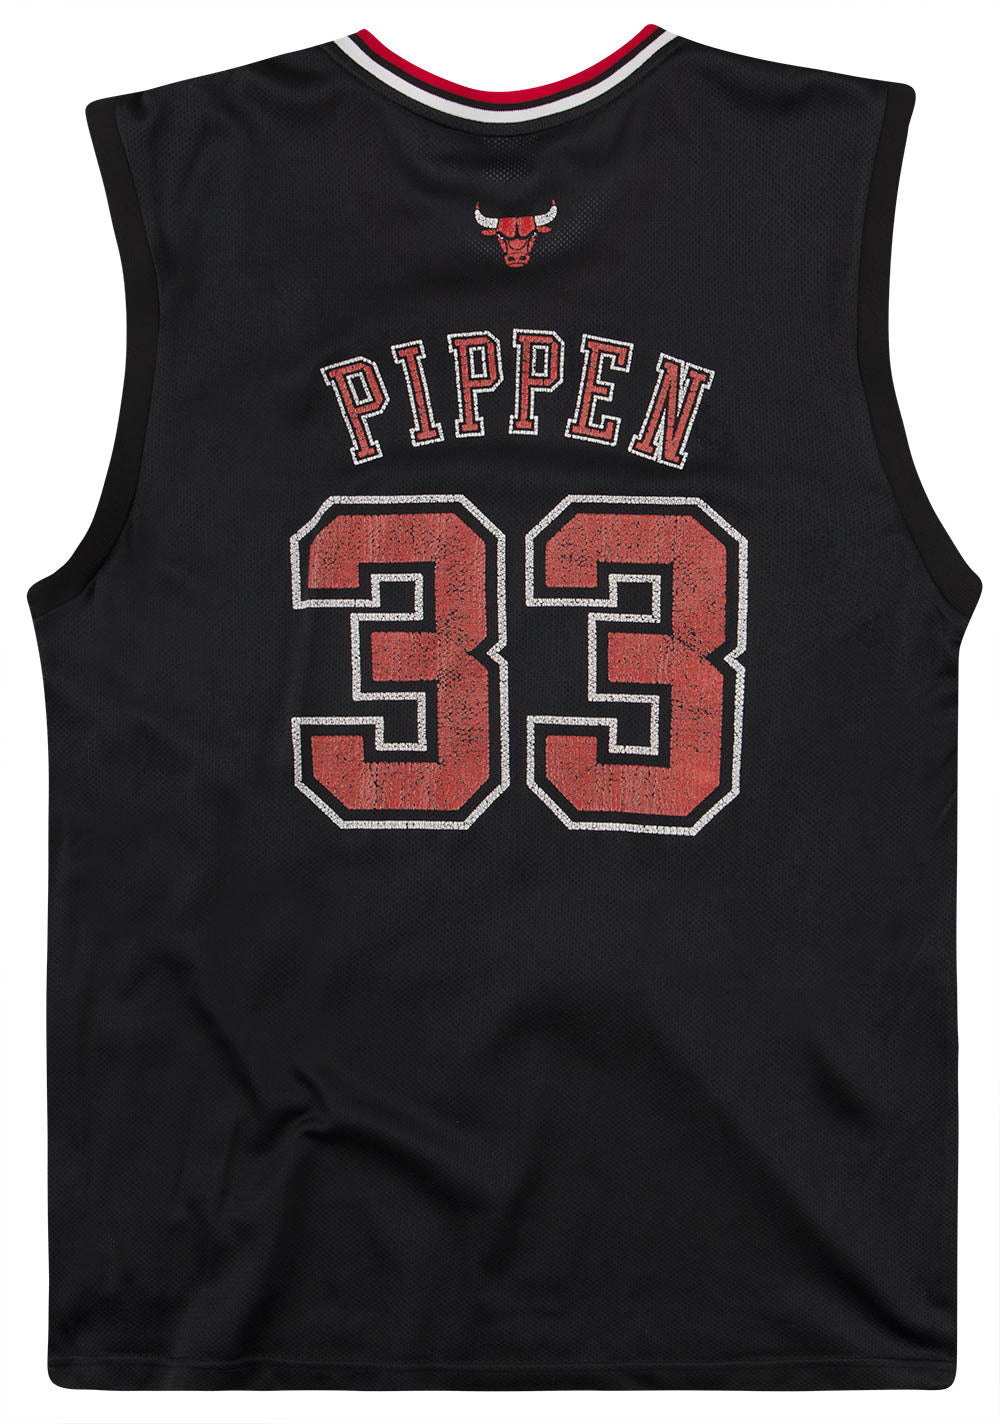 Champion, Shirts, Vintage Scottie Pippen 33 Chicago Bulls Champion Jersey  Black Size 48 Xl